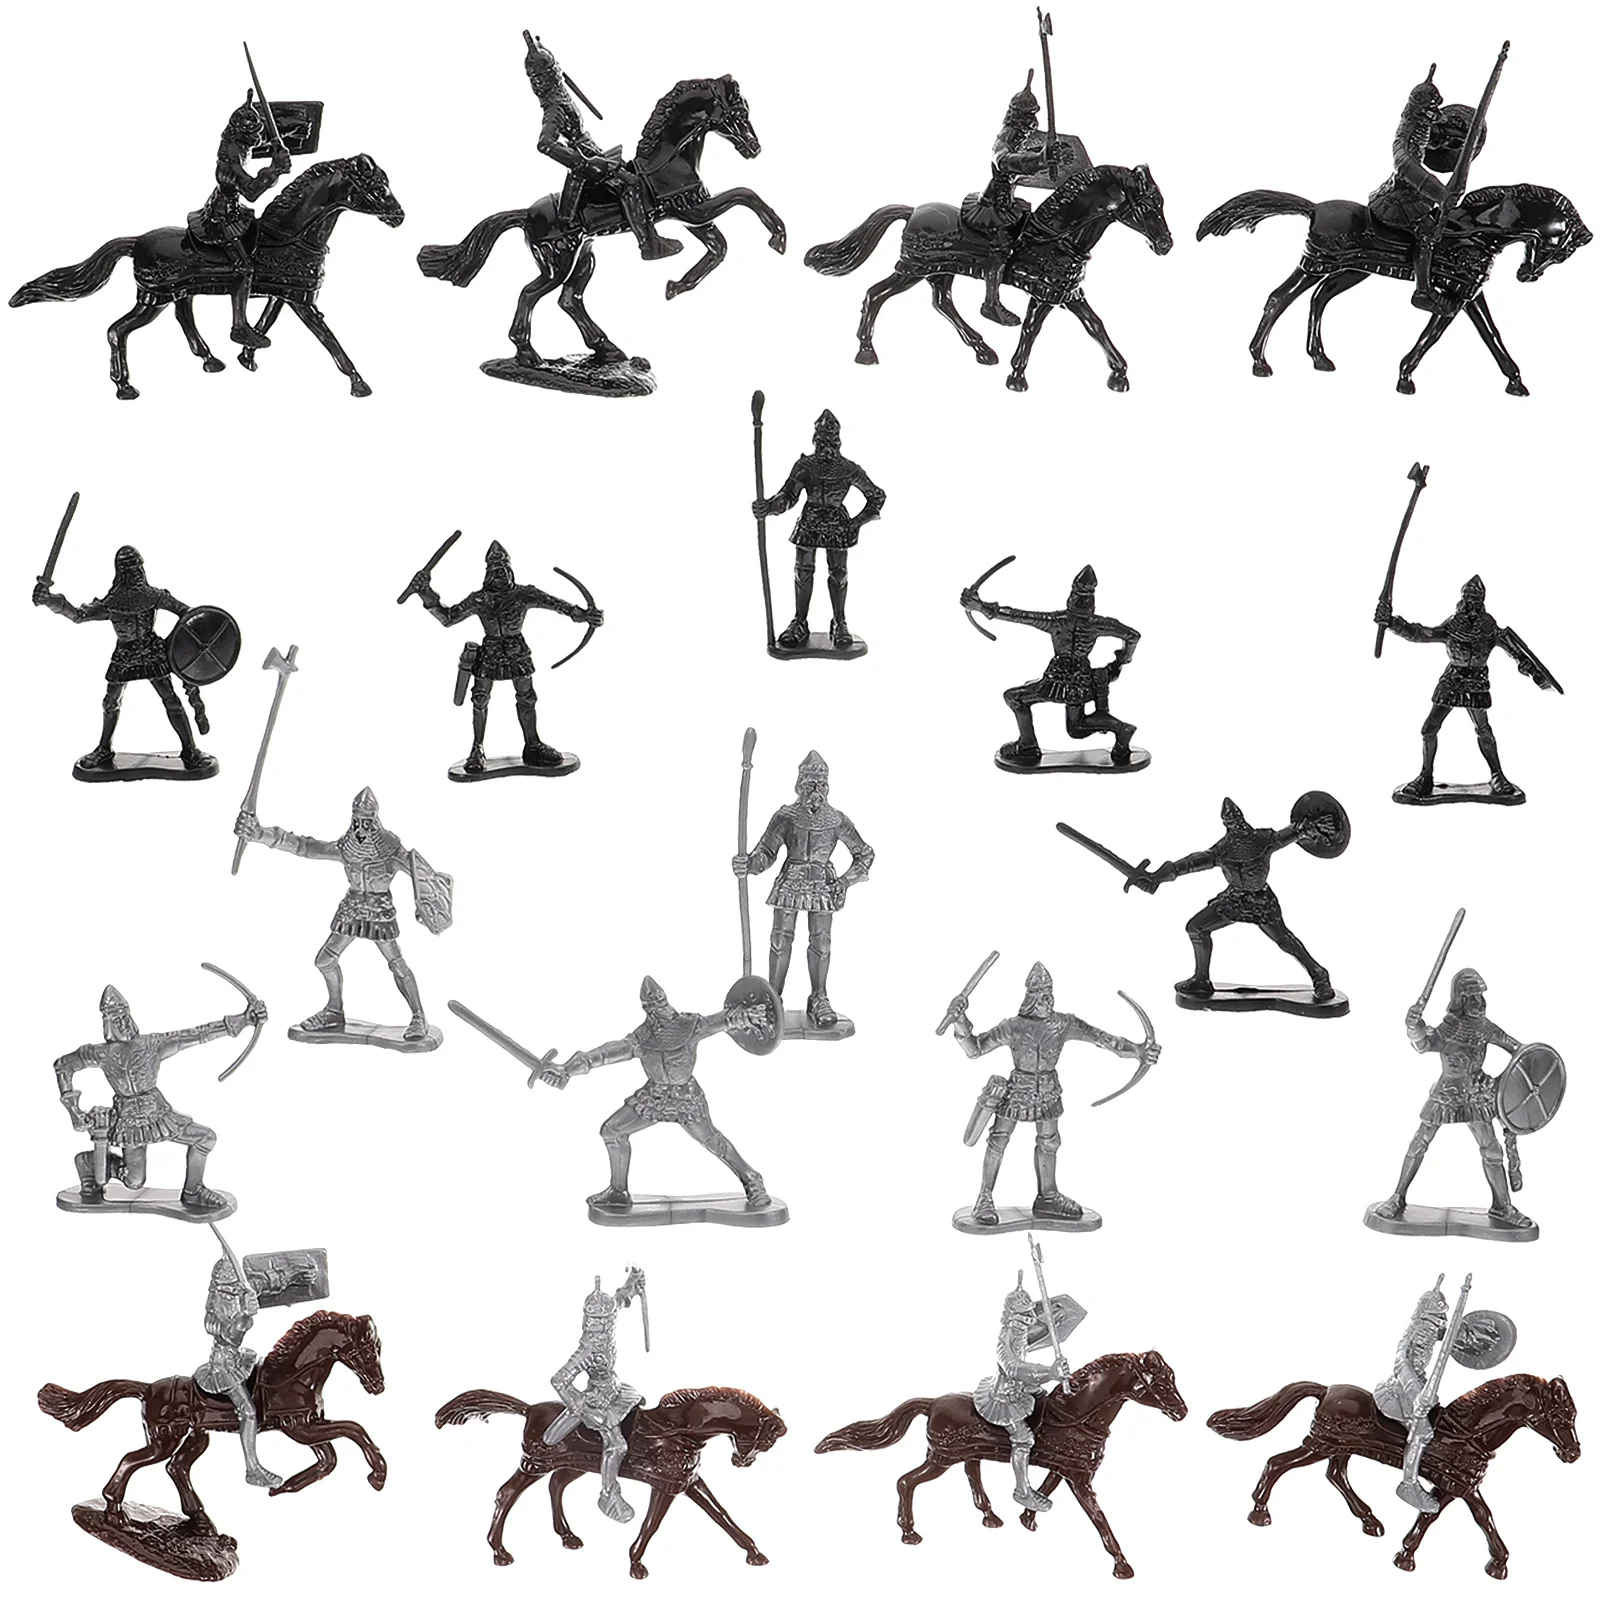 

1 Set of Mini People Models Sand Table Miniature Knight Figurines Tiny Horse Soldiers Figurines